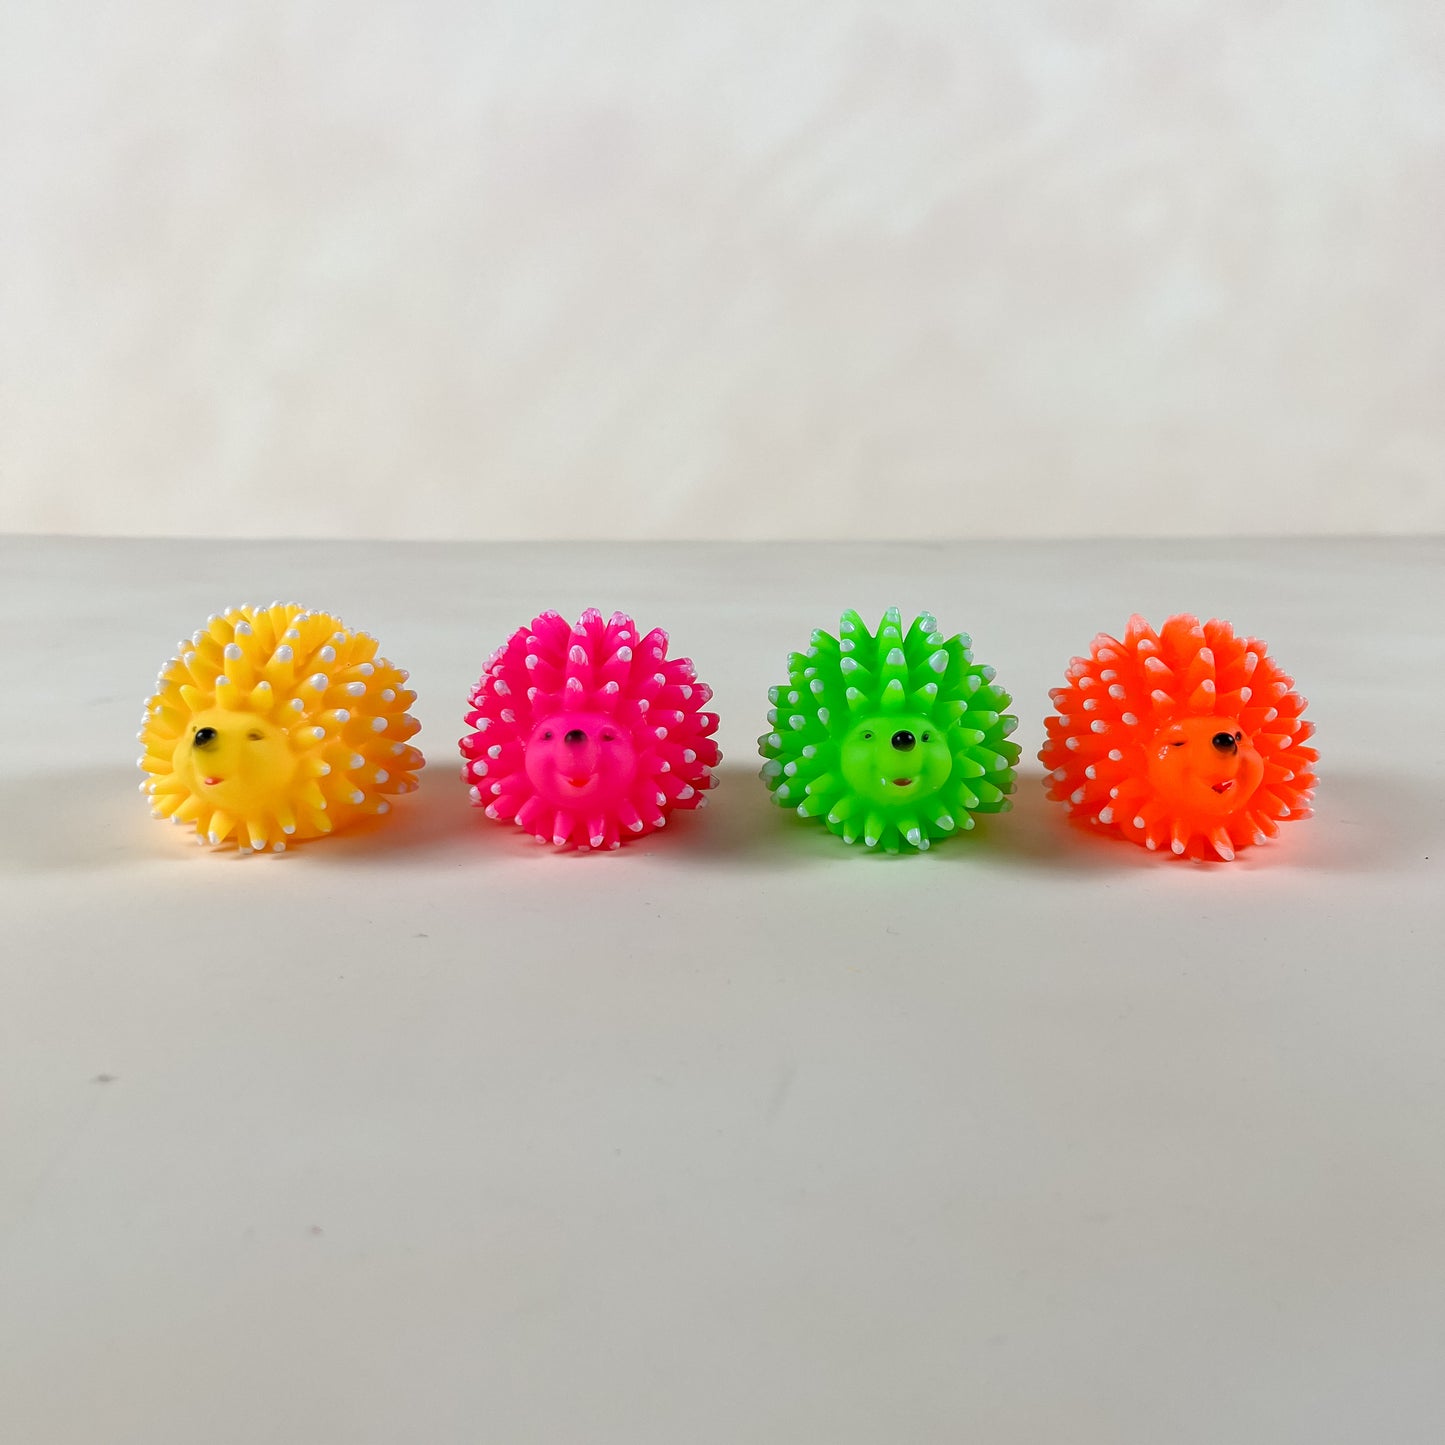 Sand hedgehog 4pcs x 9cm, different colors (price for the whole set)